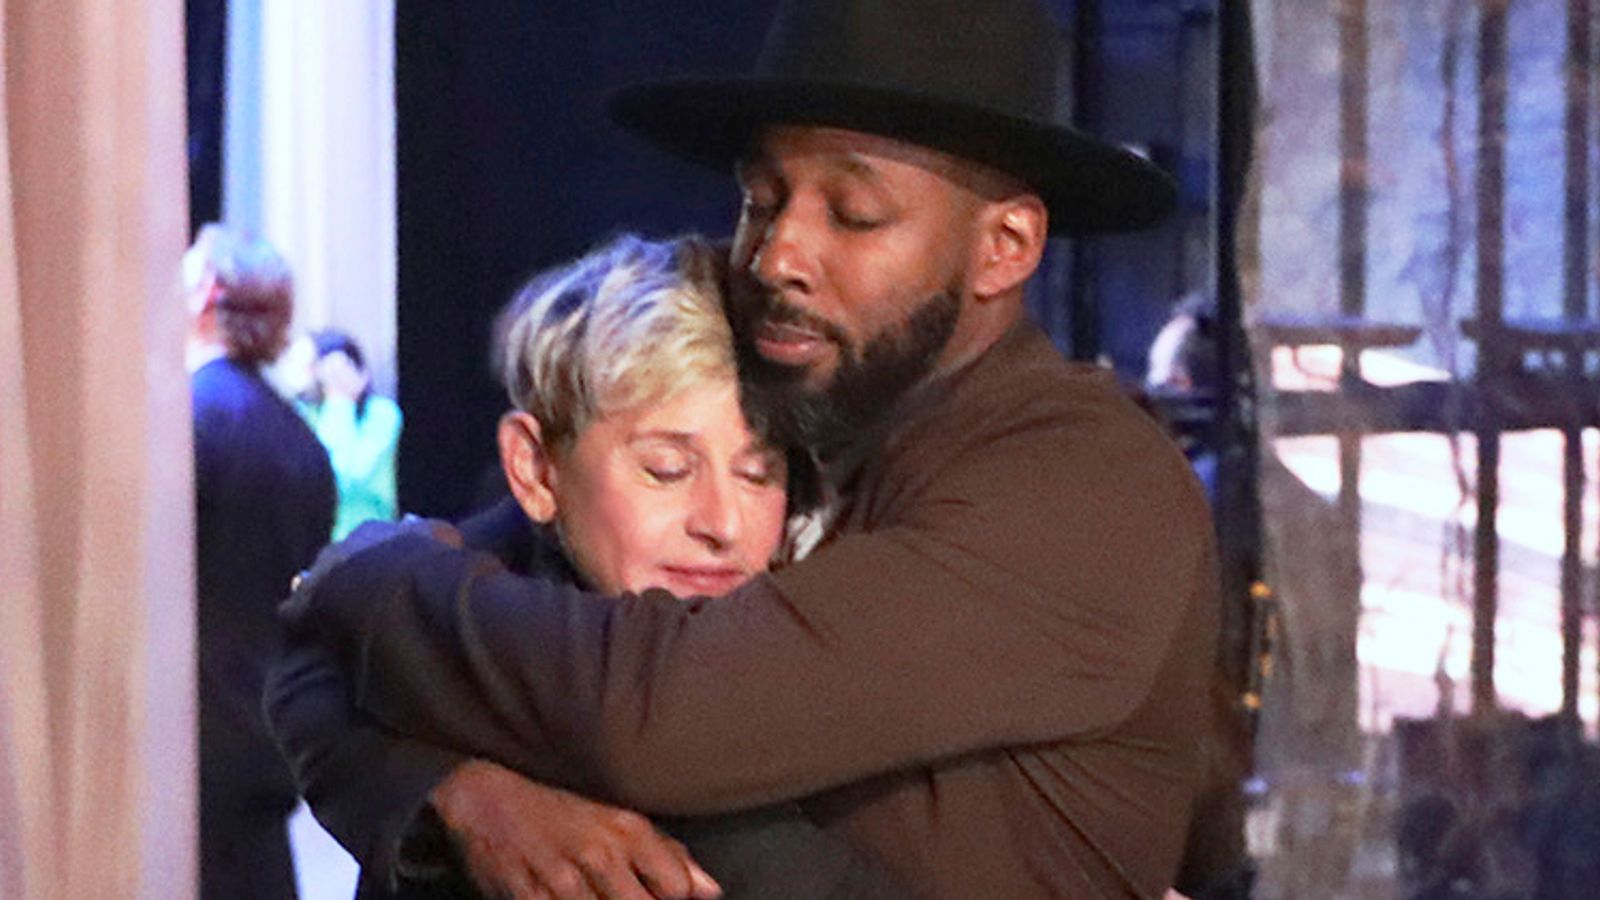 Stephen 'tWitch' Boss: Ellen DeGeneres 'heartbroken' over death of DJ and co-host as celebrities pay tribute